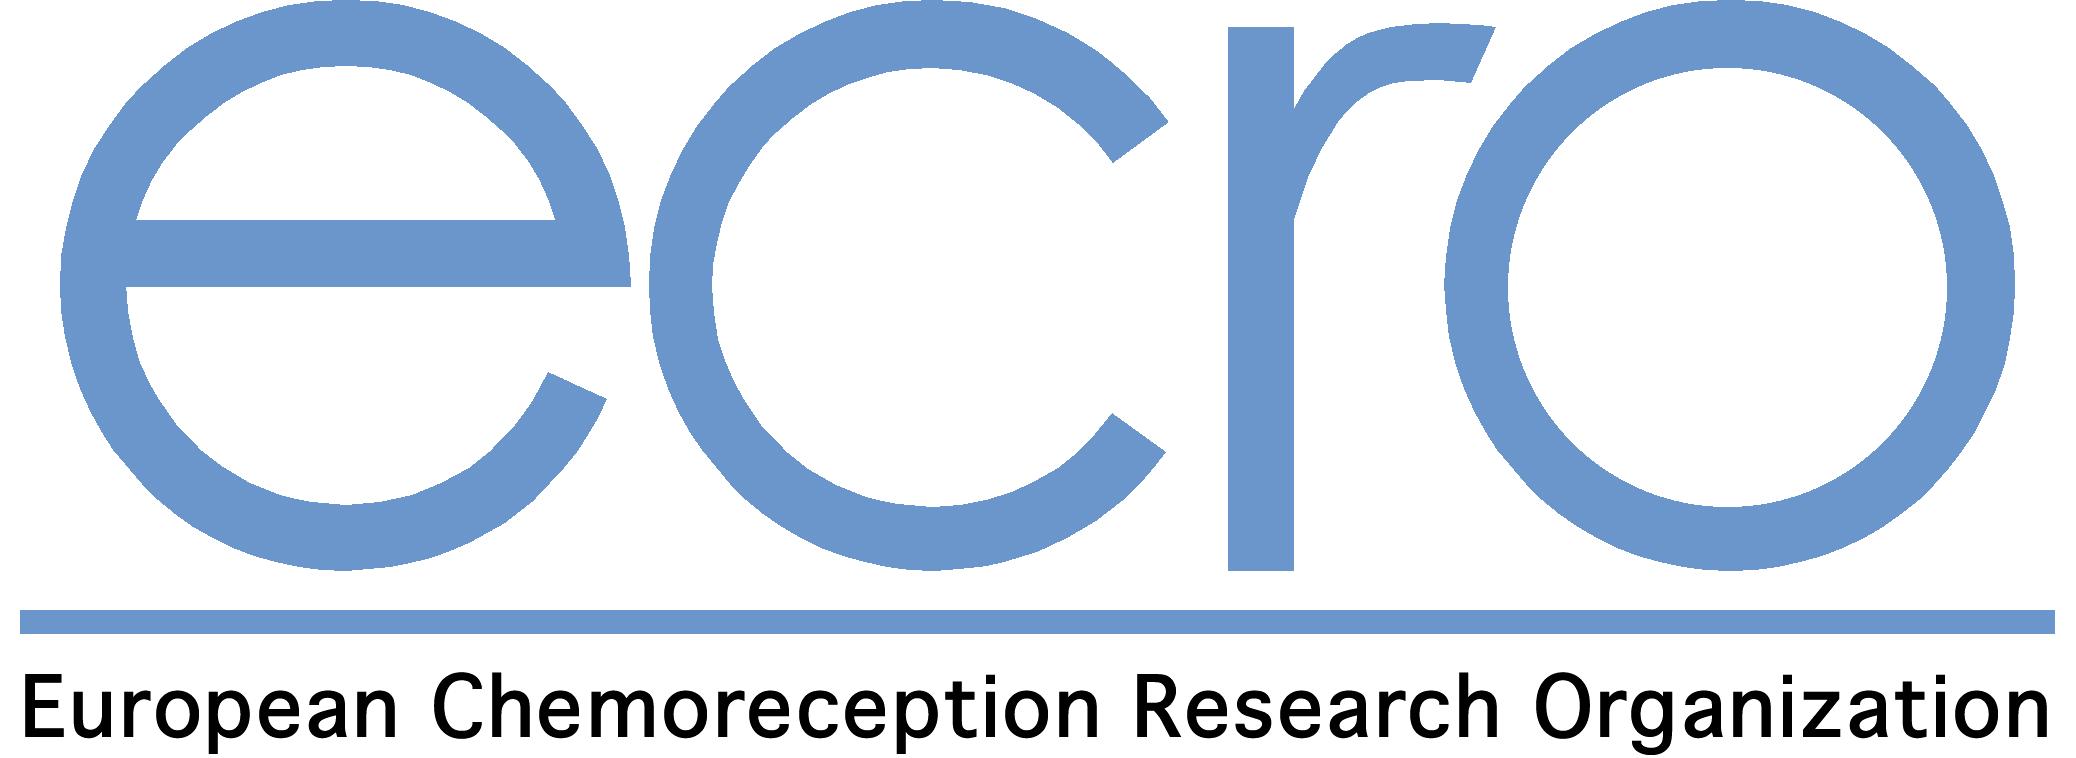 ECRO - European Chemoreception Research Organization